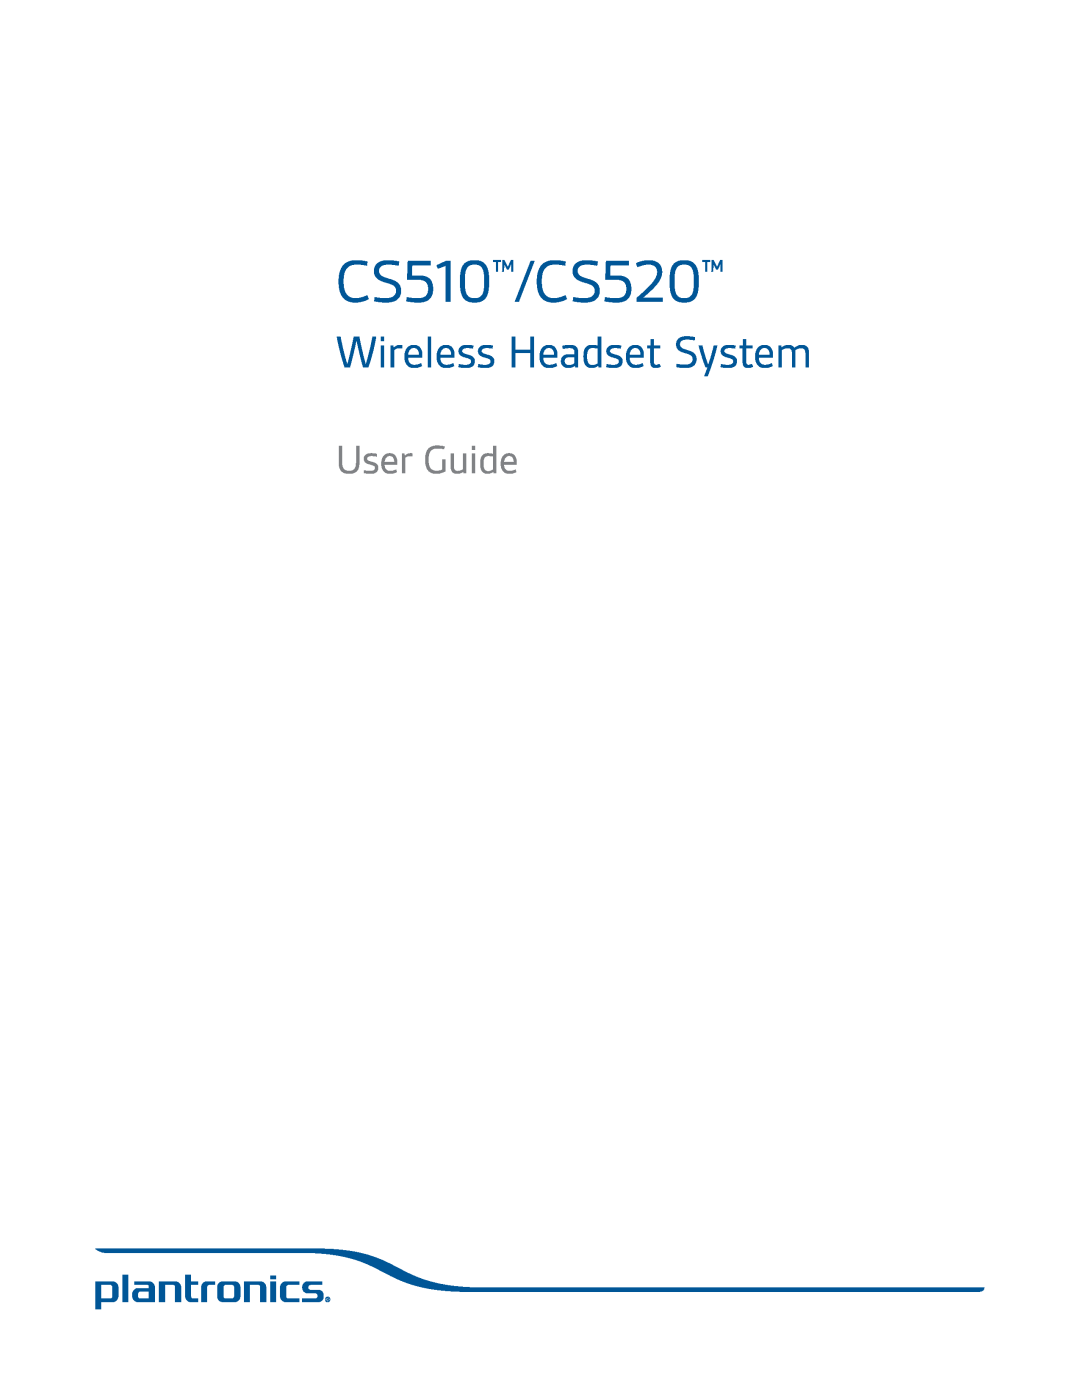 Plantronics manual CS510/CS520, Wireless Headset System, User Guide 